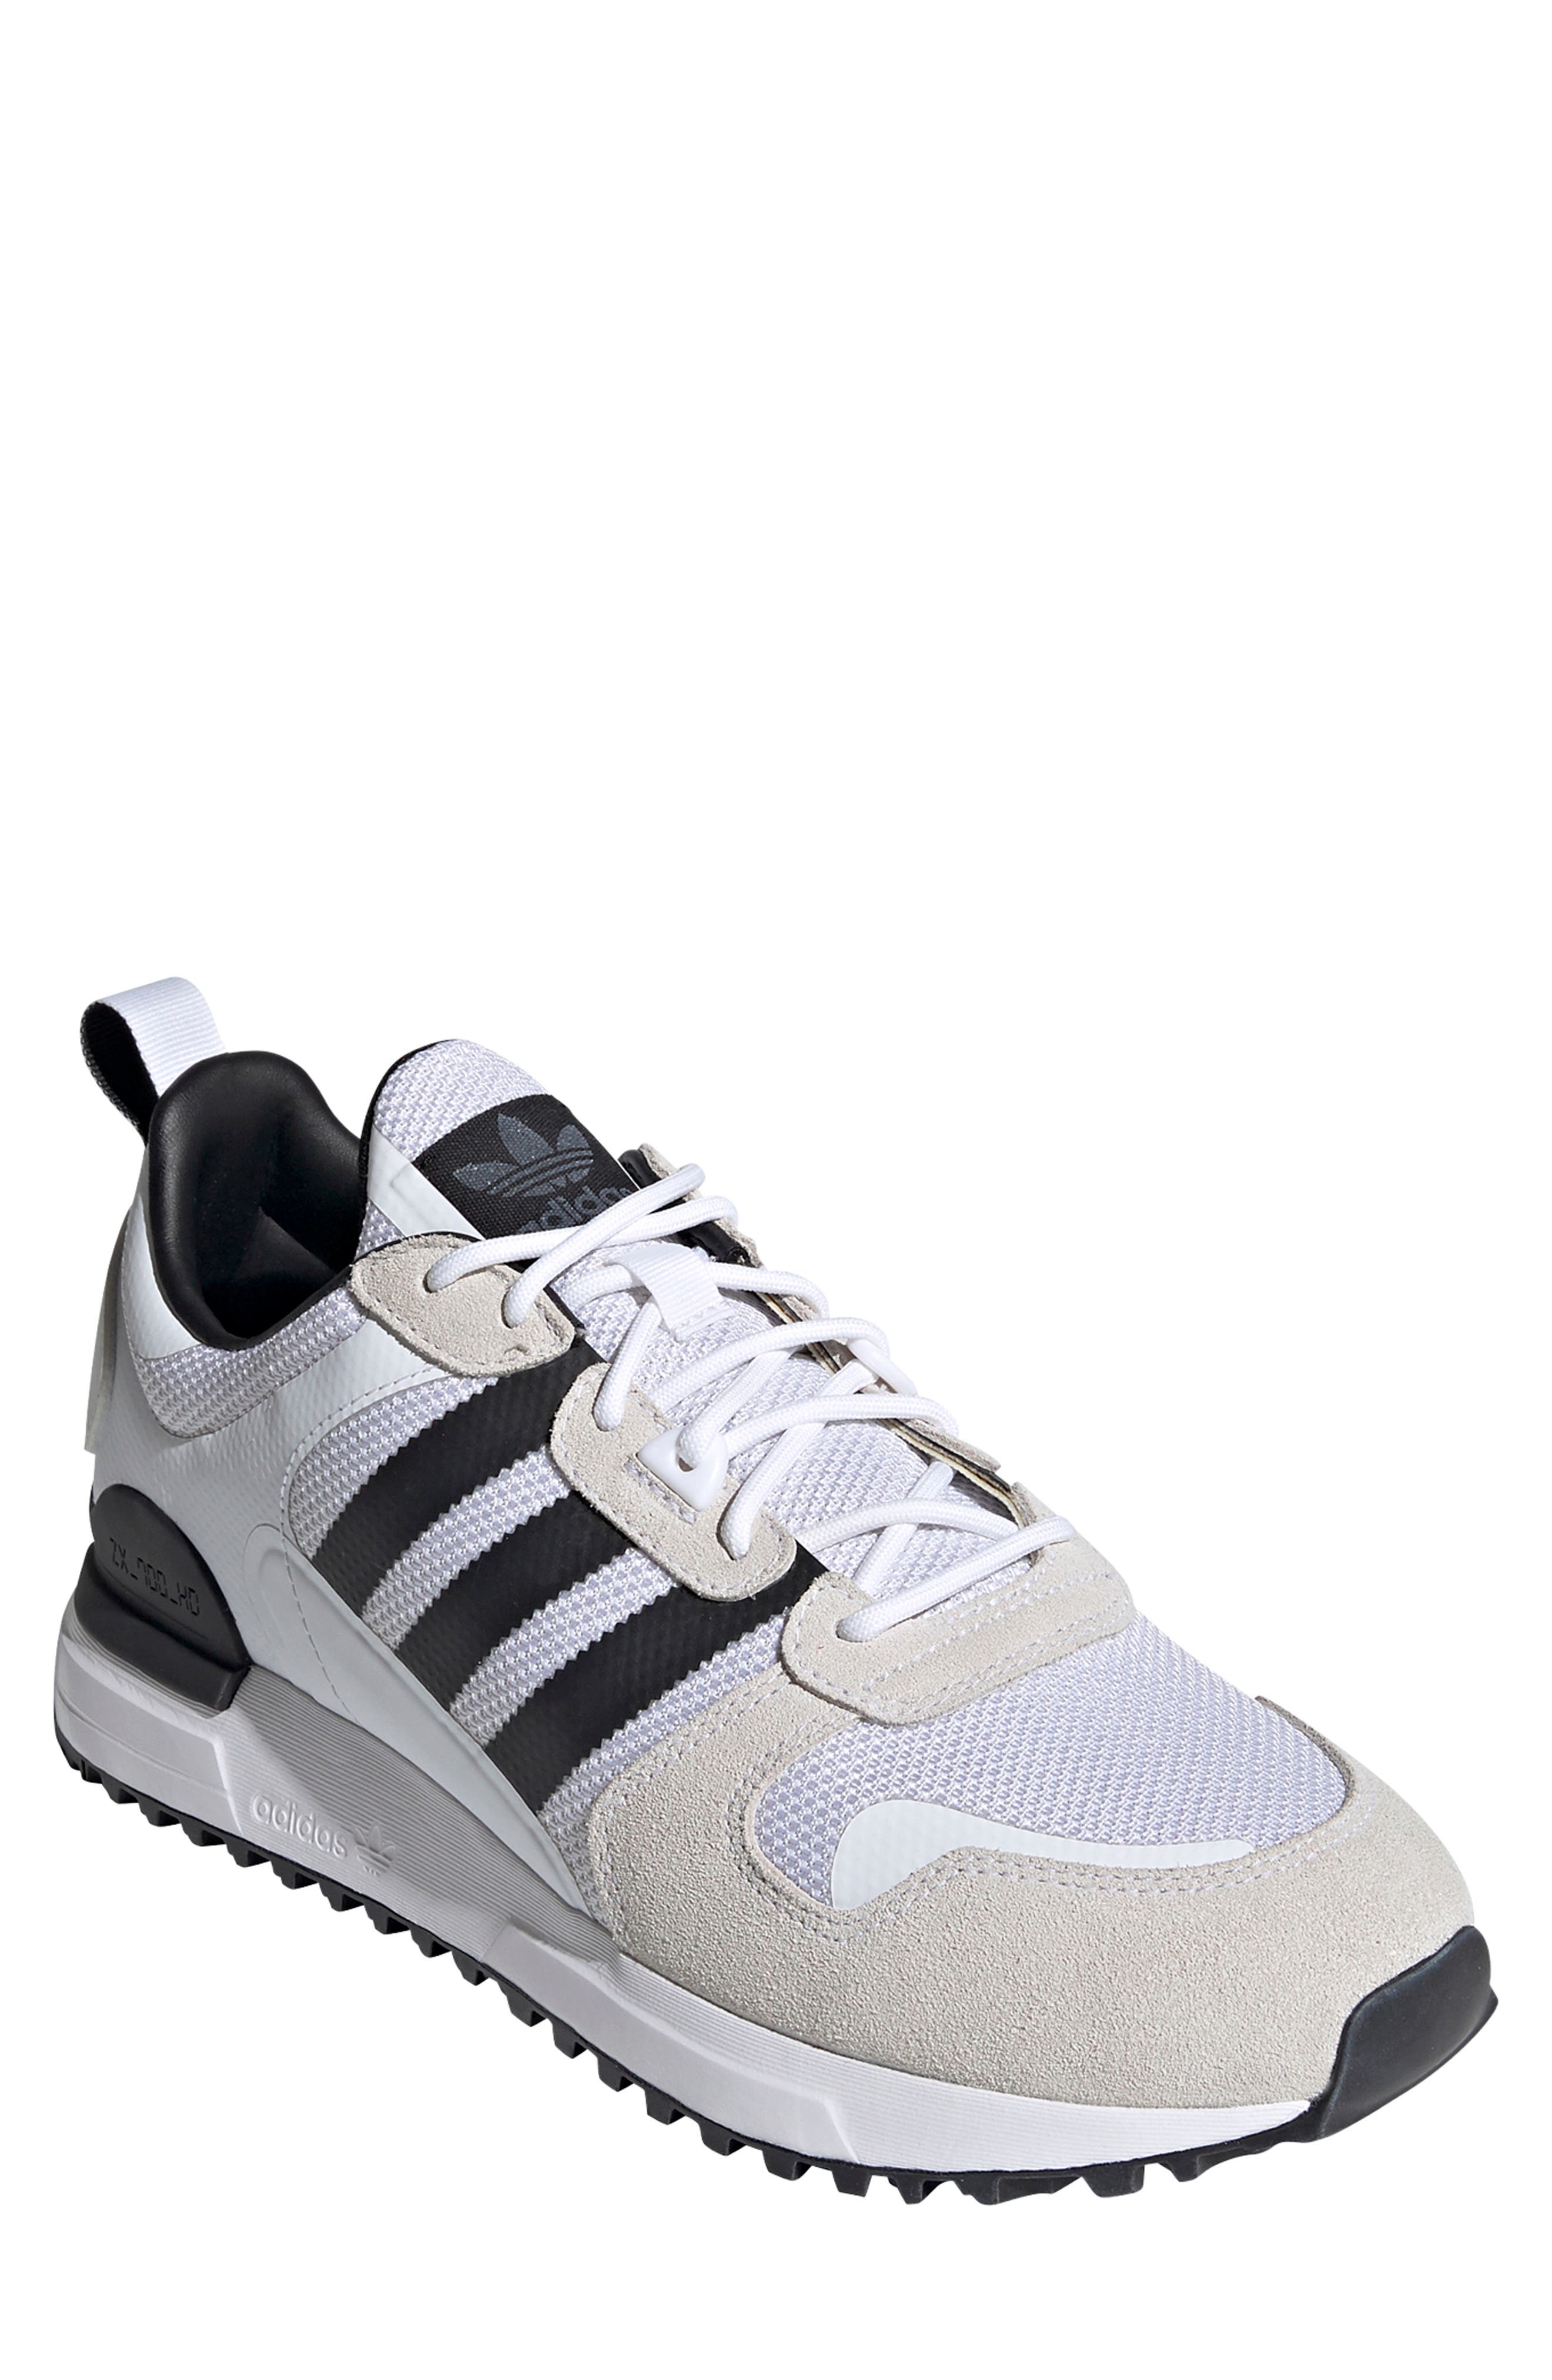 Adidas Originals ZX 700 HD White/Black Men's Running Shoes, Size: 8.5